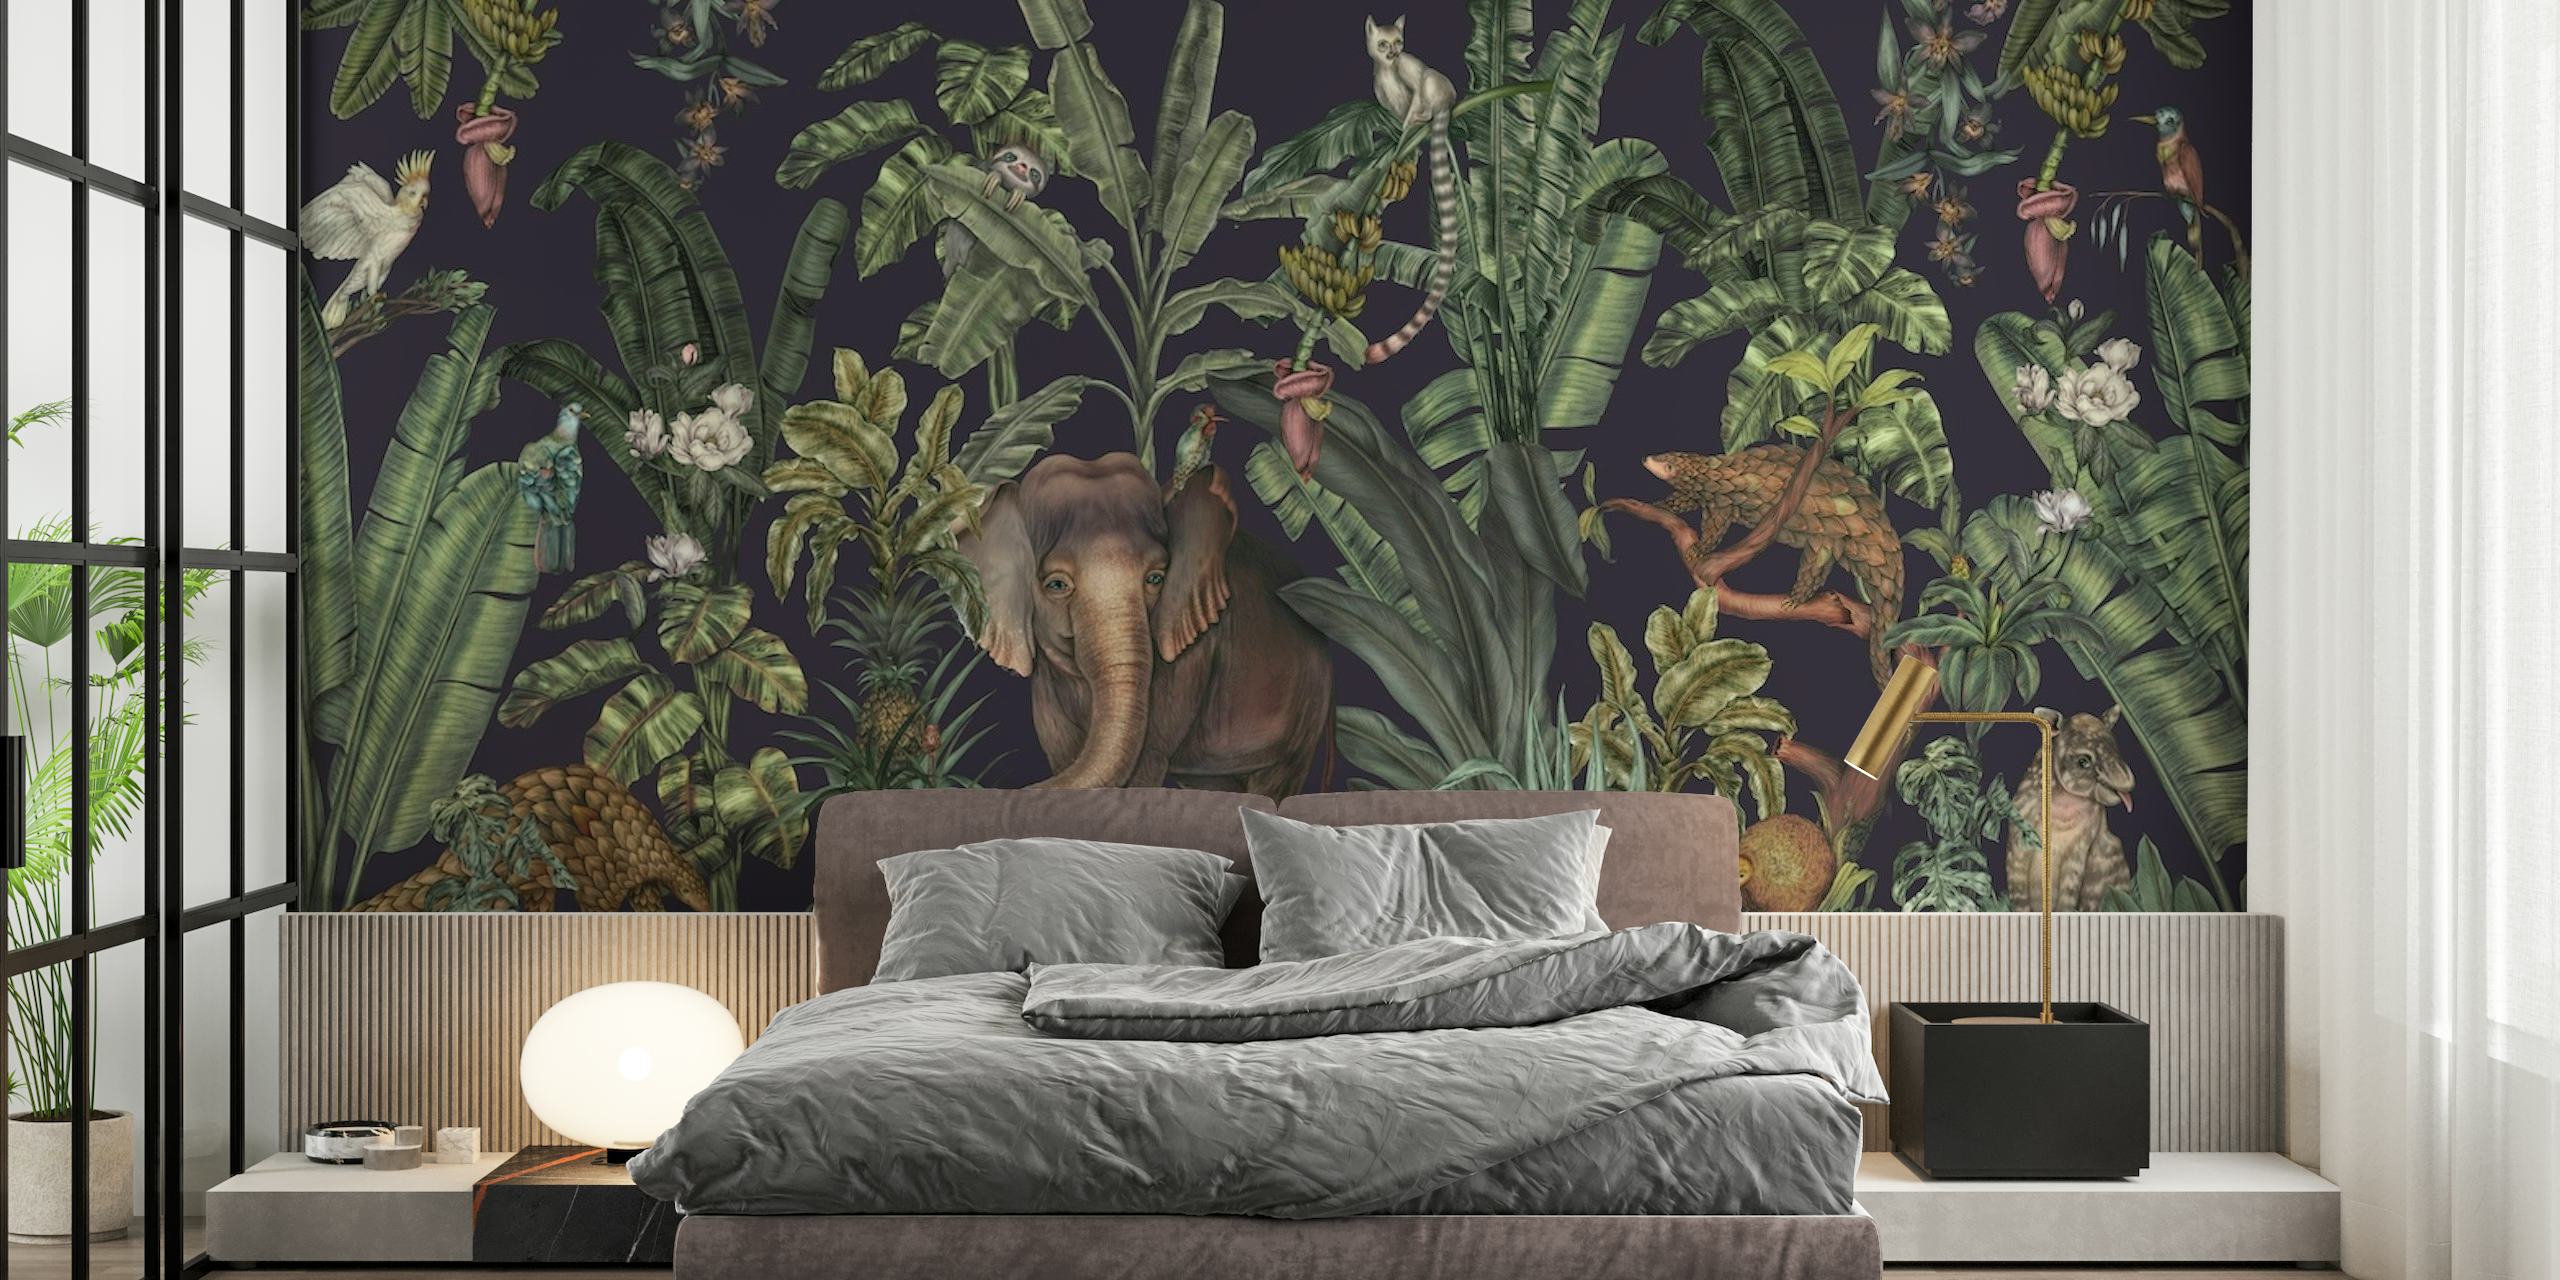 Zidna slika tropske džungle s gustim zelenilom i skrivenim divljim životinjama